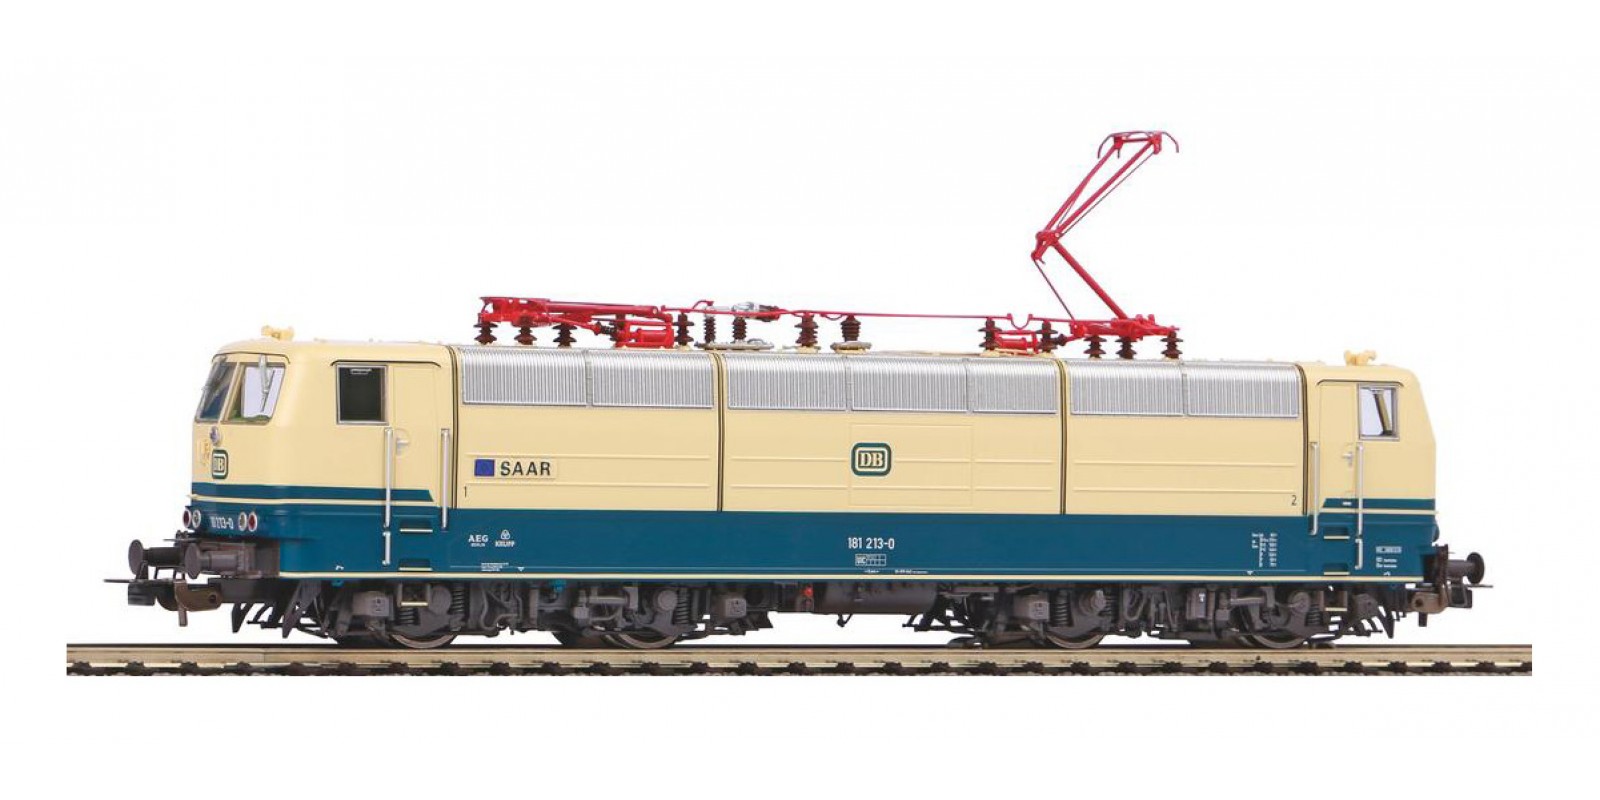 PI51345 Gauge H0 Electric locomotive class 181.2 "Saar" of the DB, epoch IV, AC version